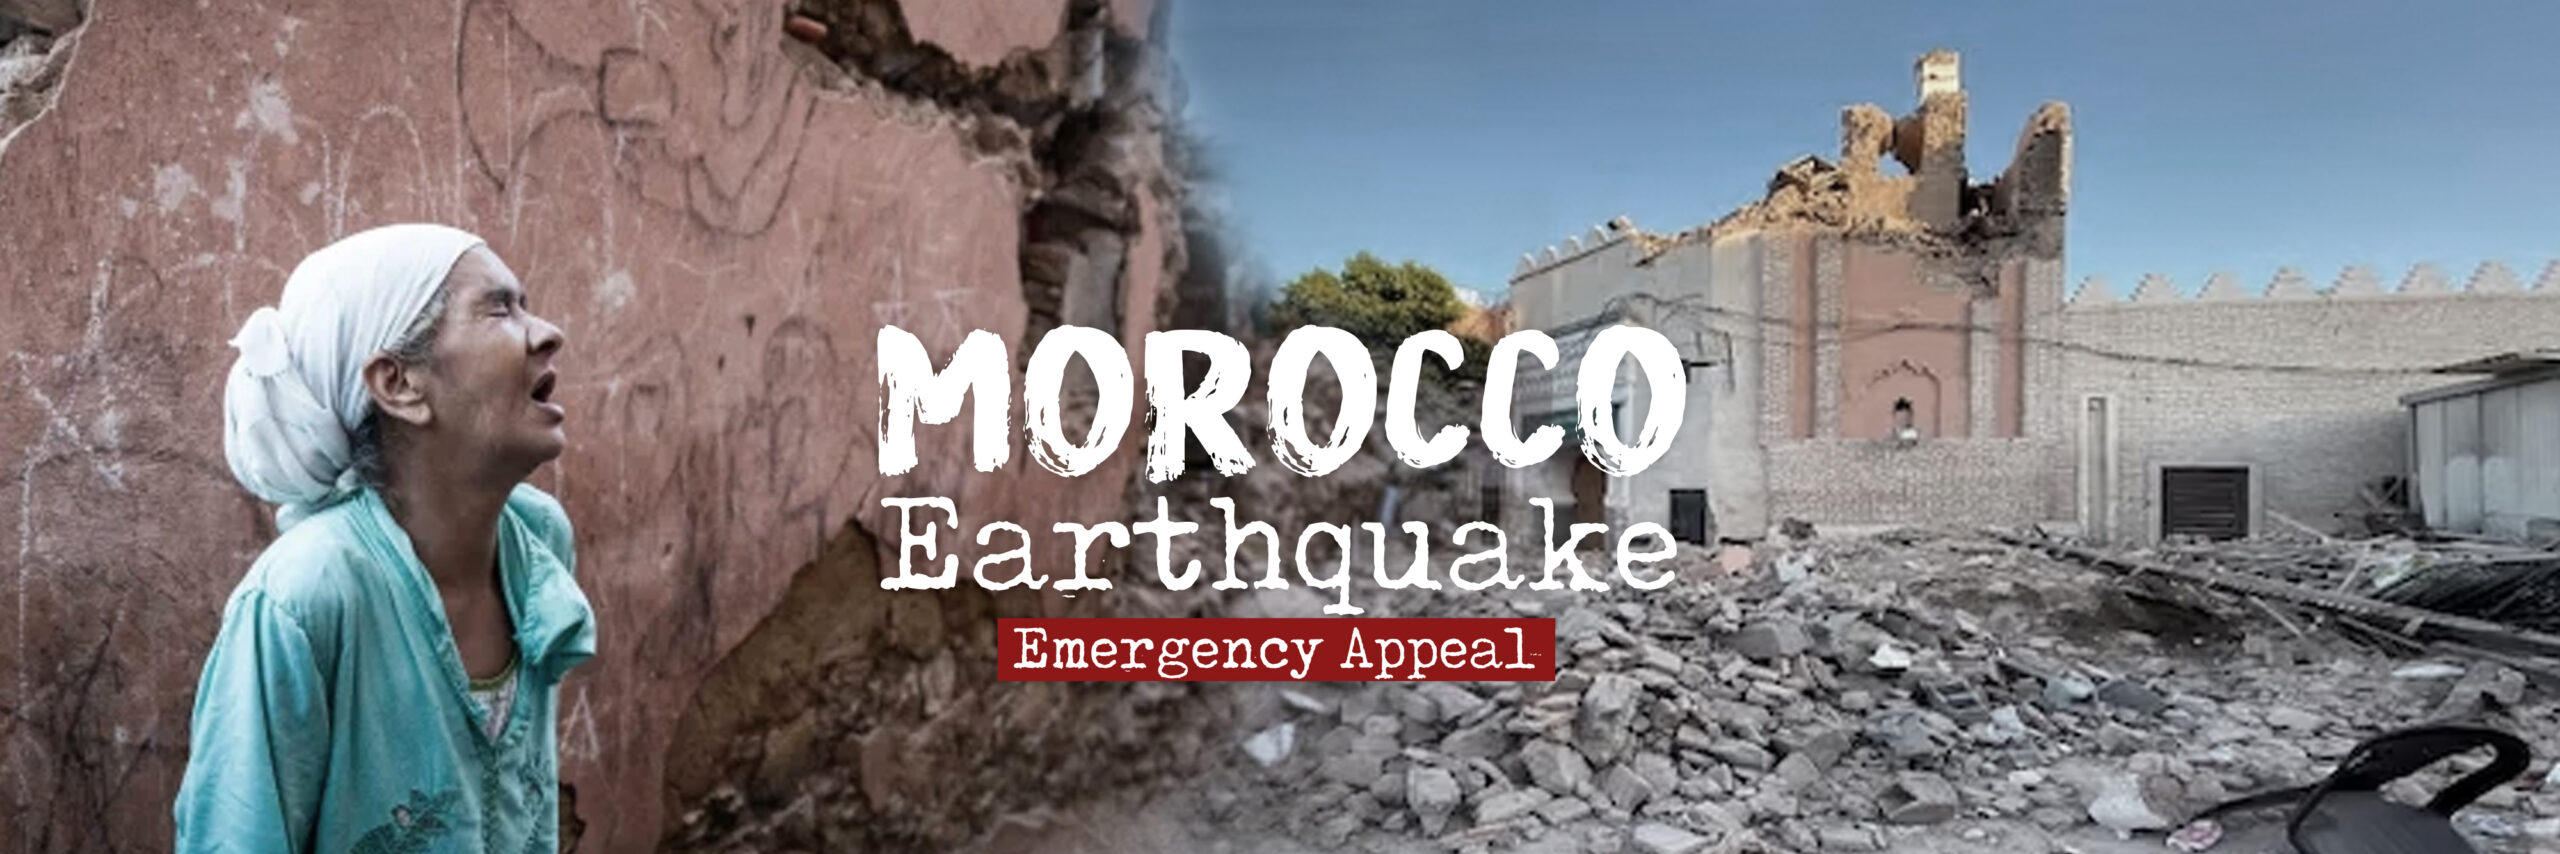 Morocco emergency appeal